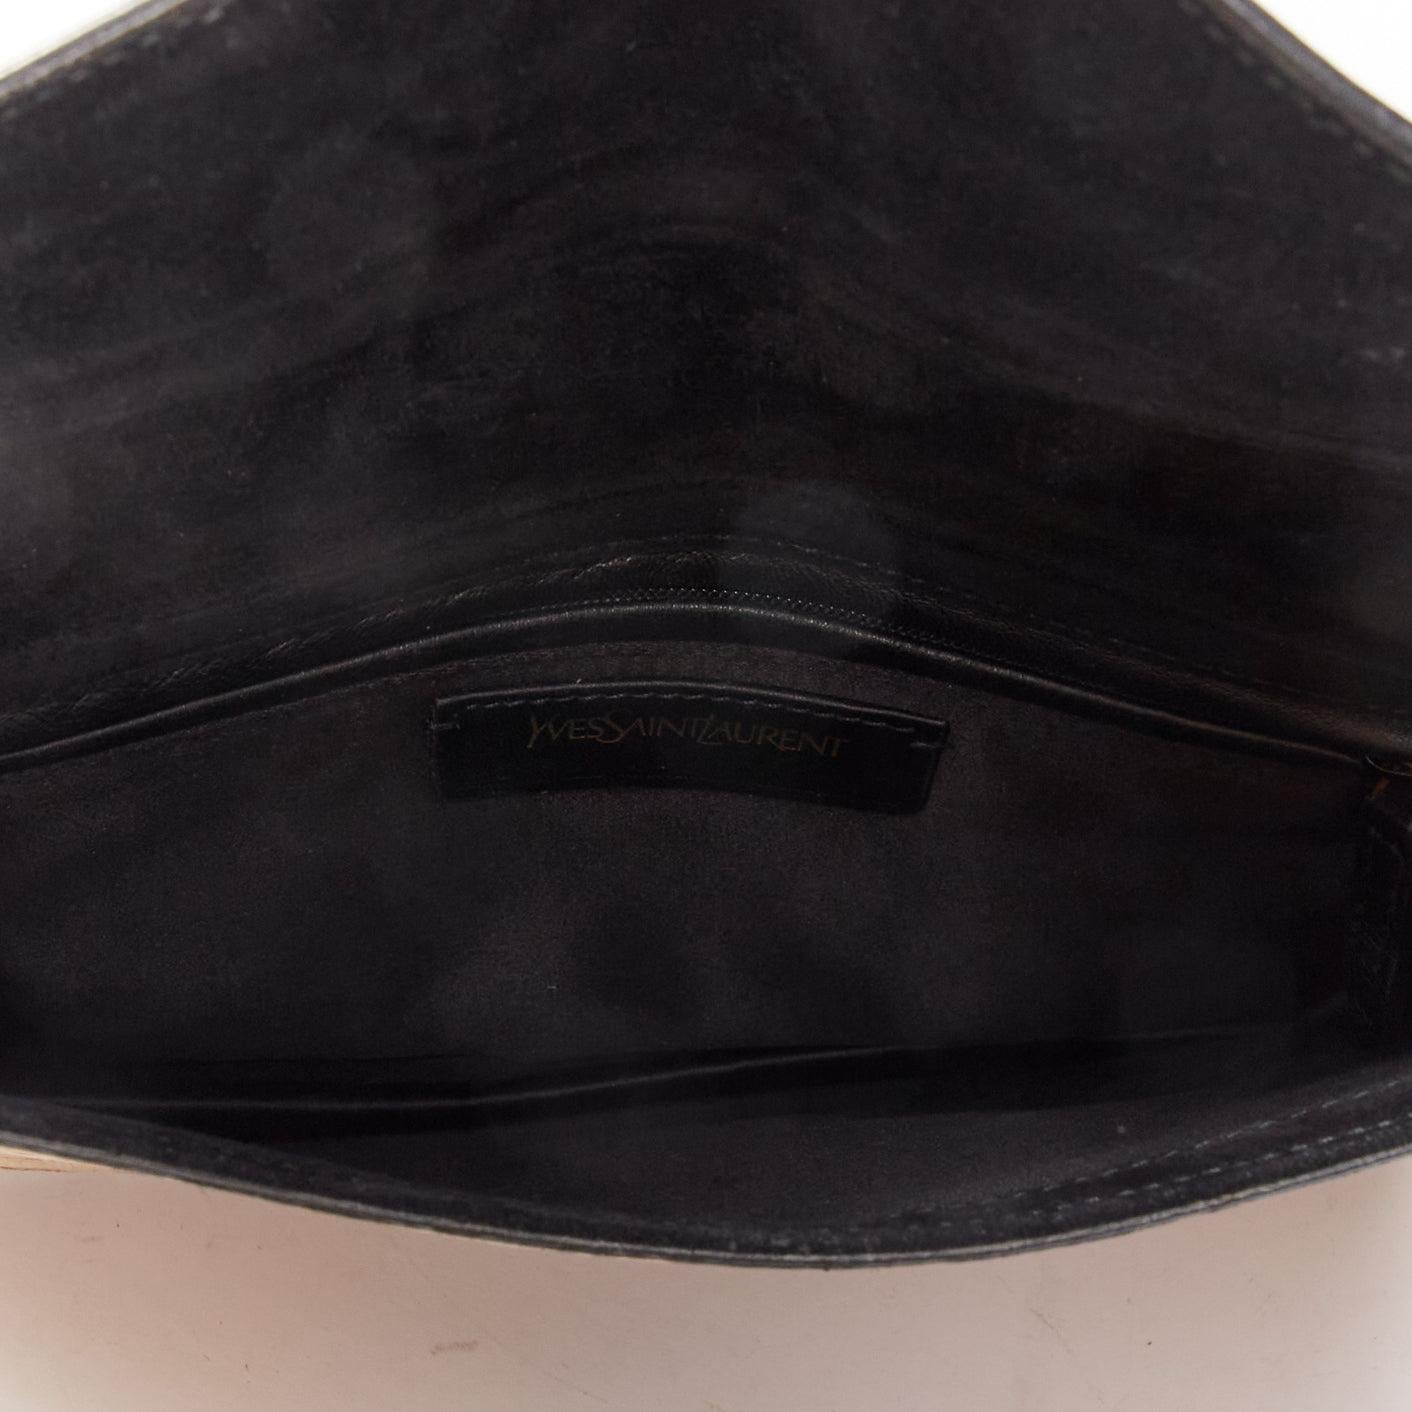 YVES SAINT LAURENT Vintage Cork brown patent leather small envelope clutch bag For Sale 5